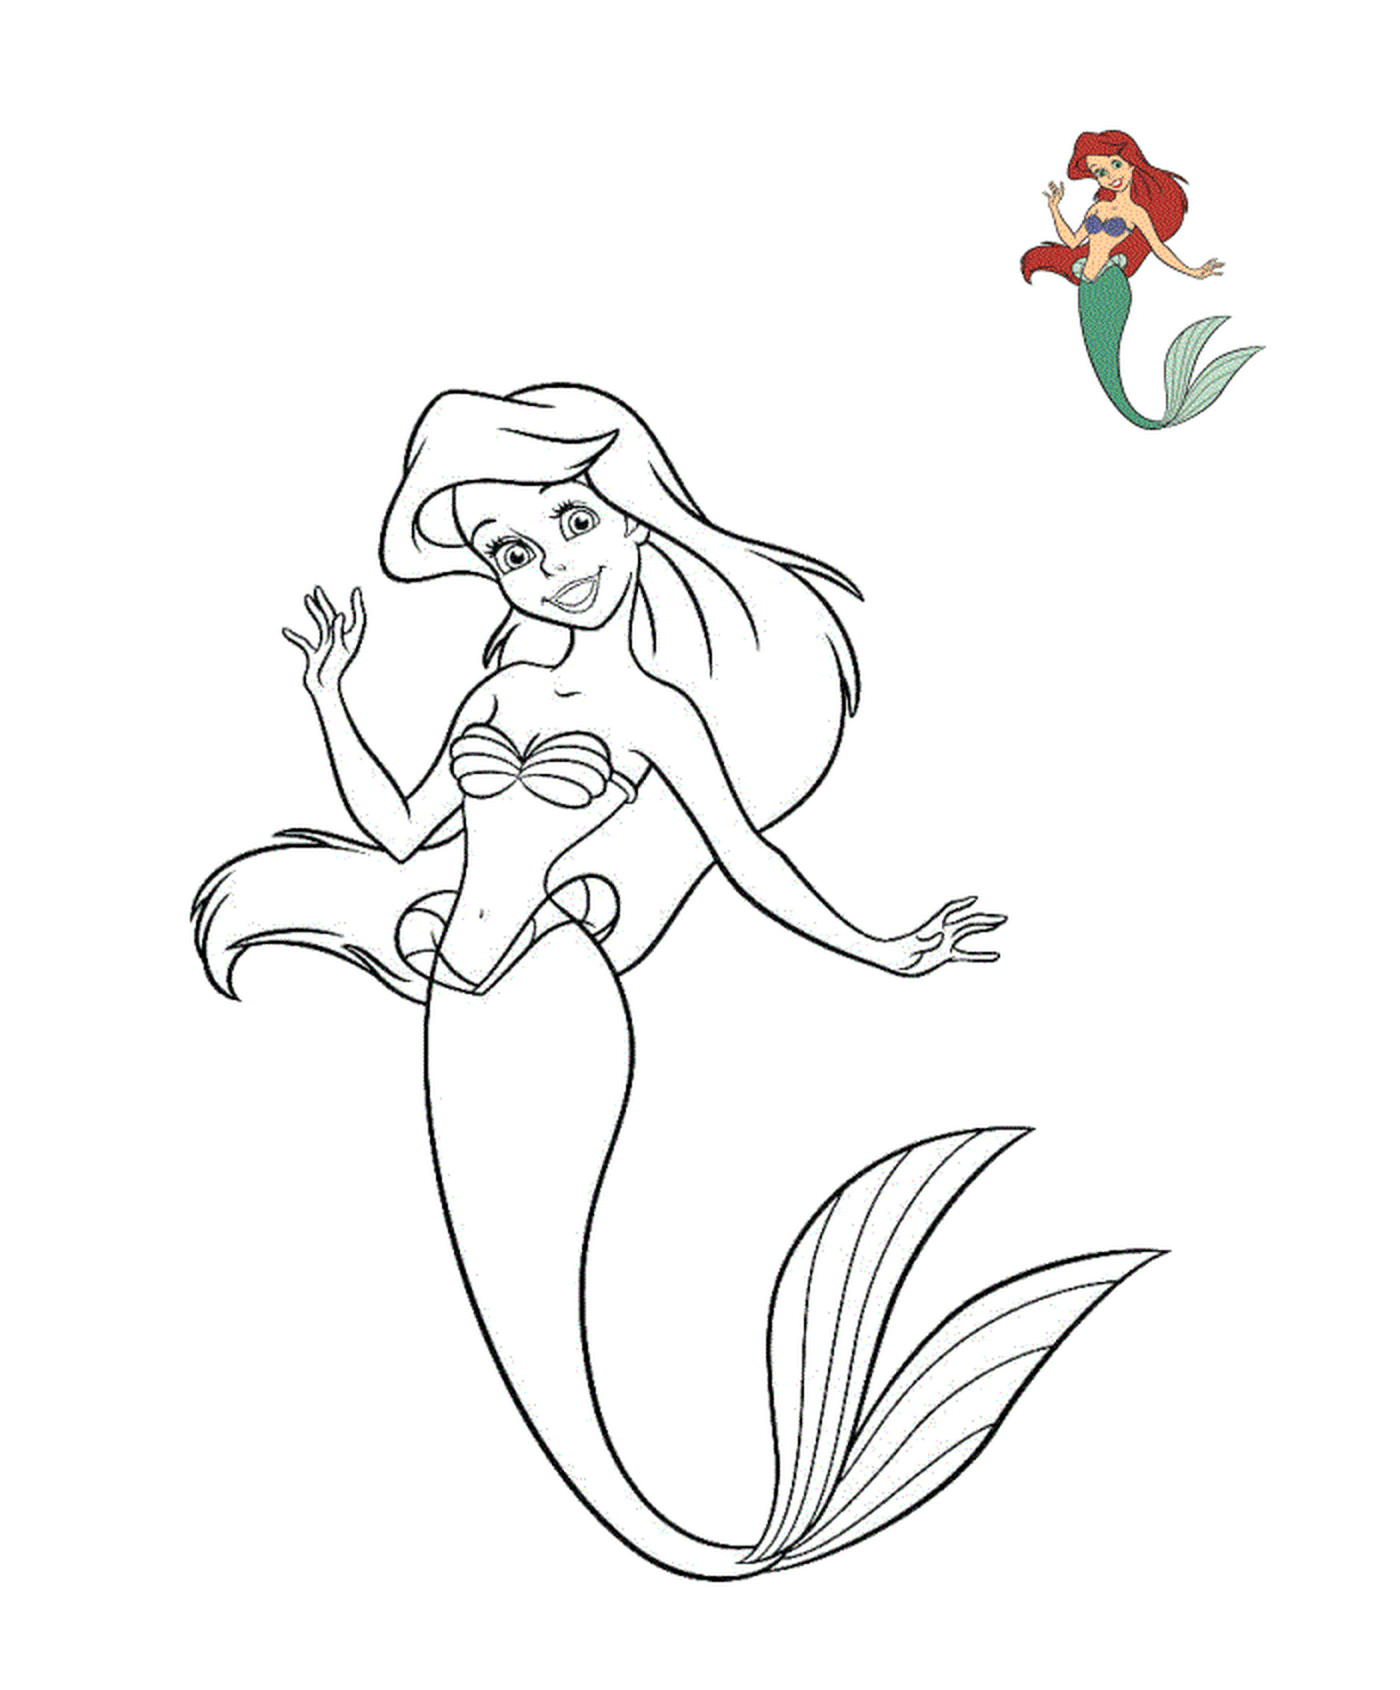  Ariel, Disney's little mermaid, princess 